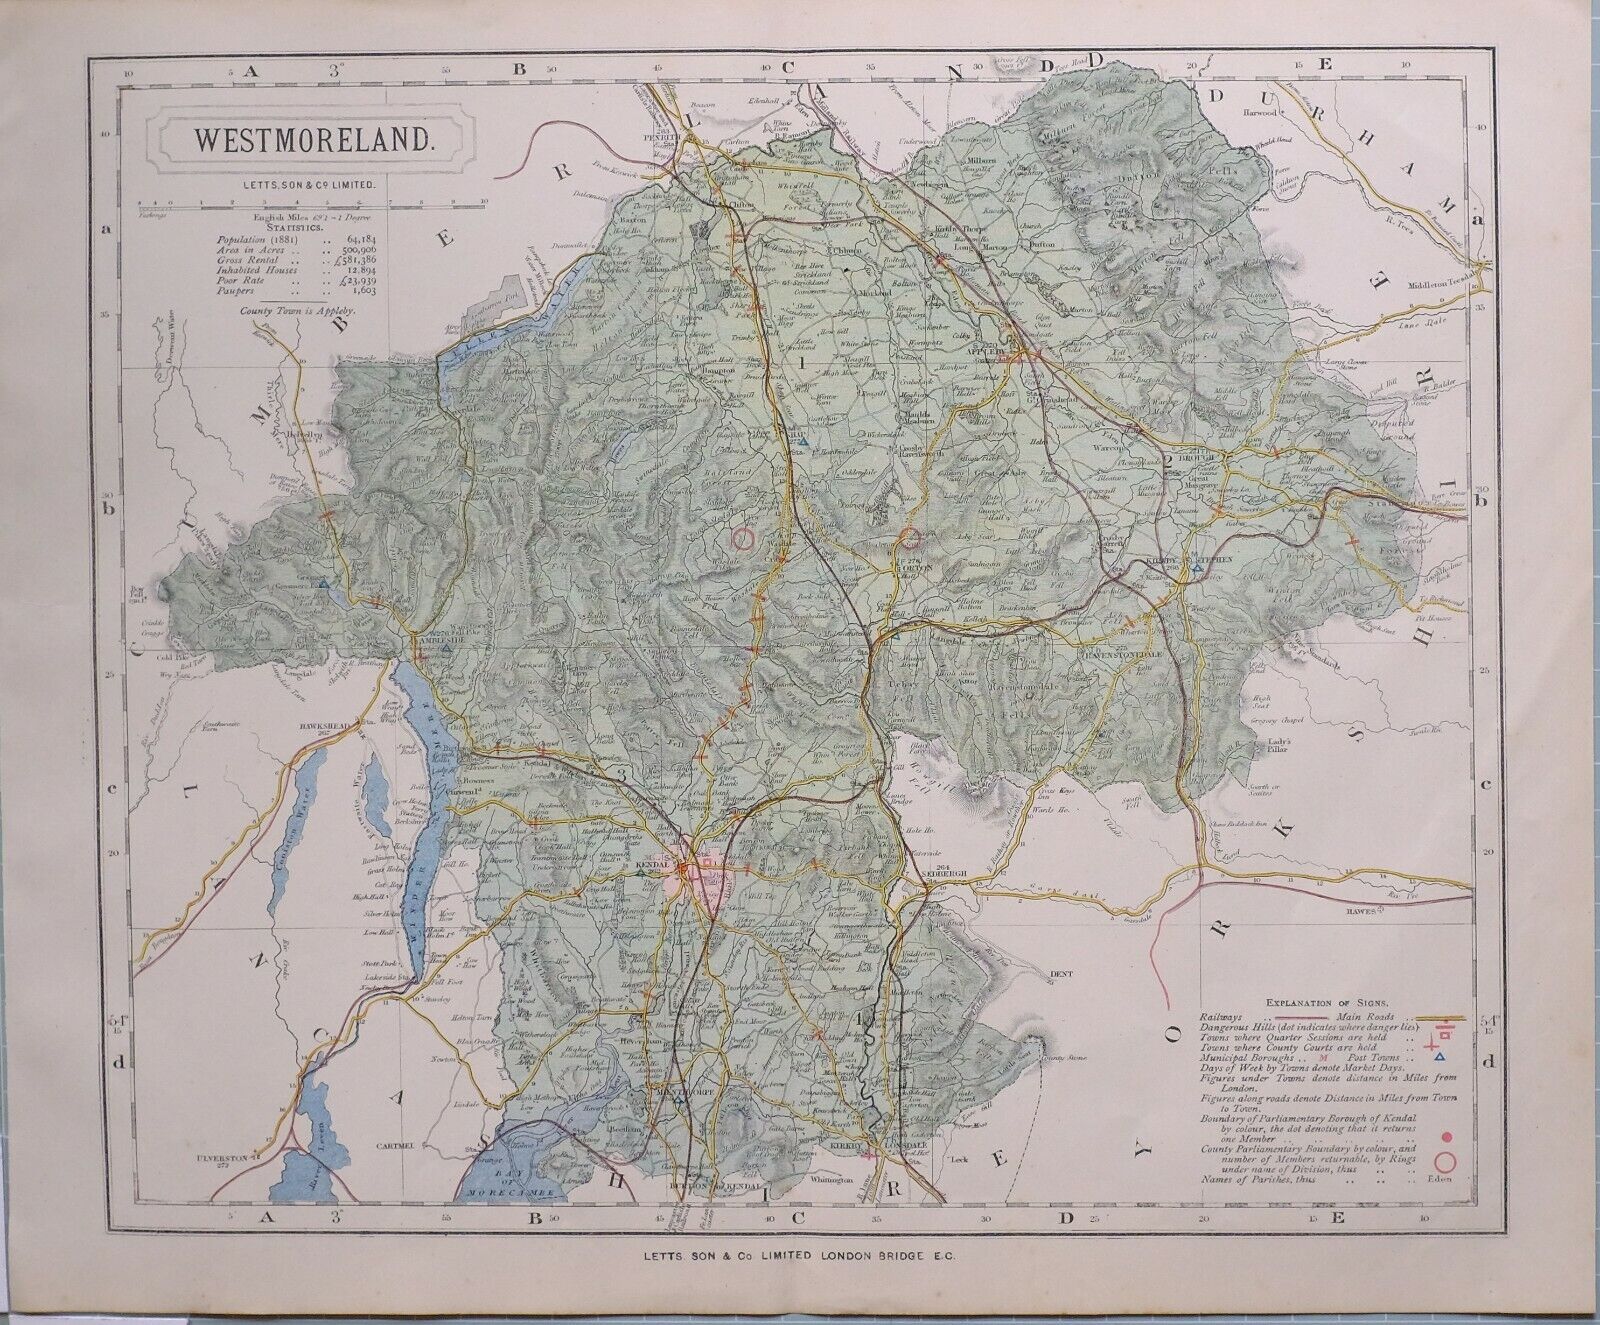 1884 COUNTY MAP WESTMORELAND Branded mart goods RAILWAYS KENDAL AMBLESIDE APP ROADS